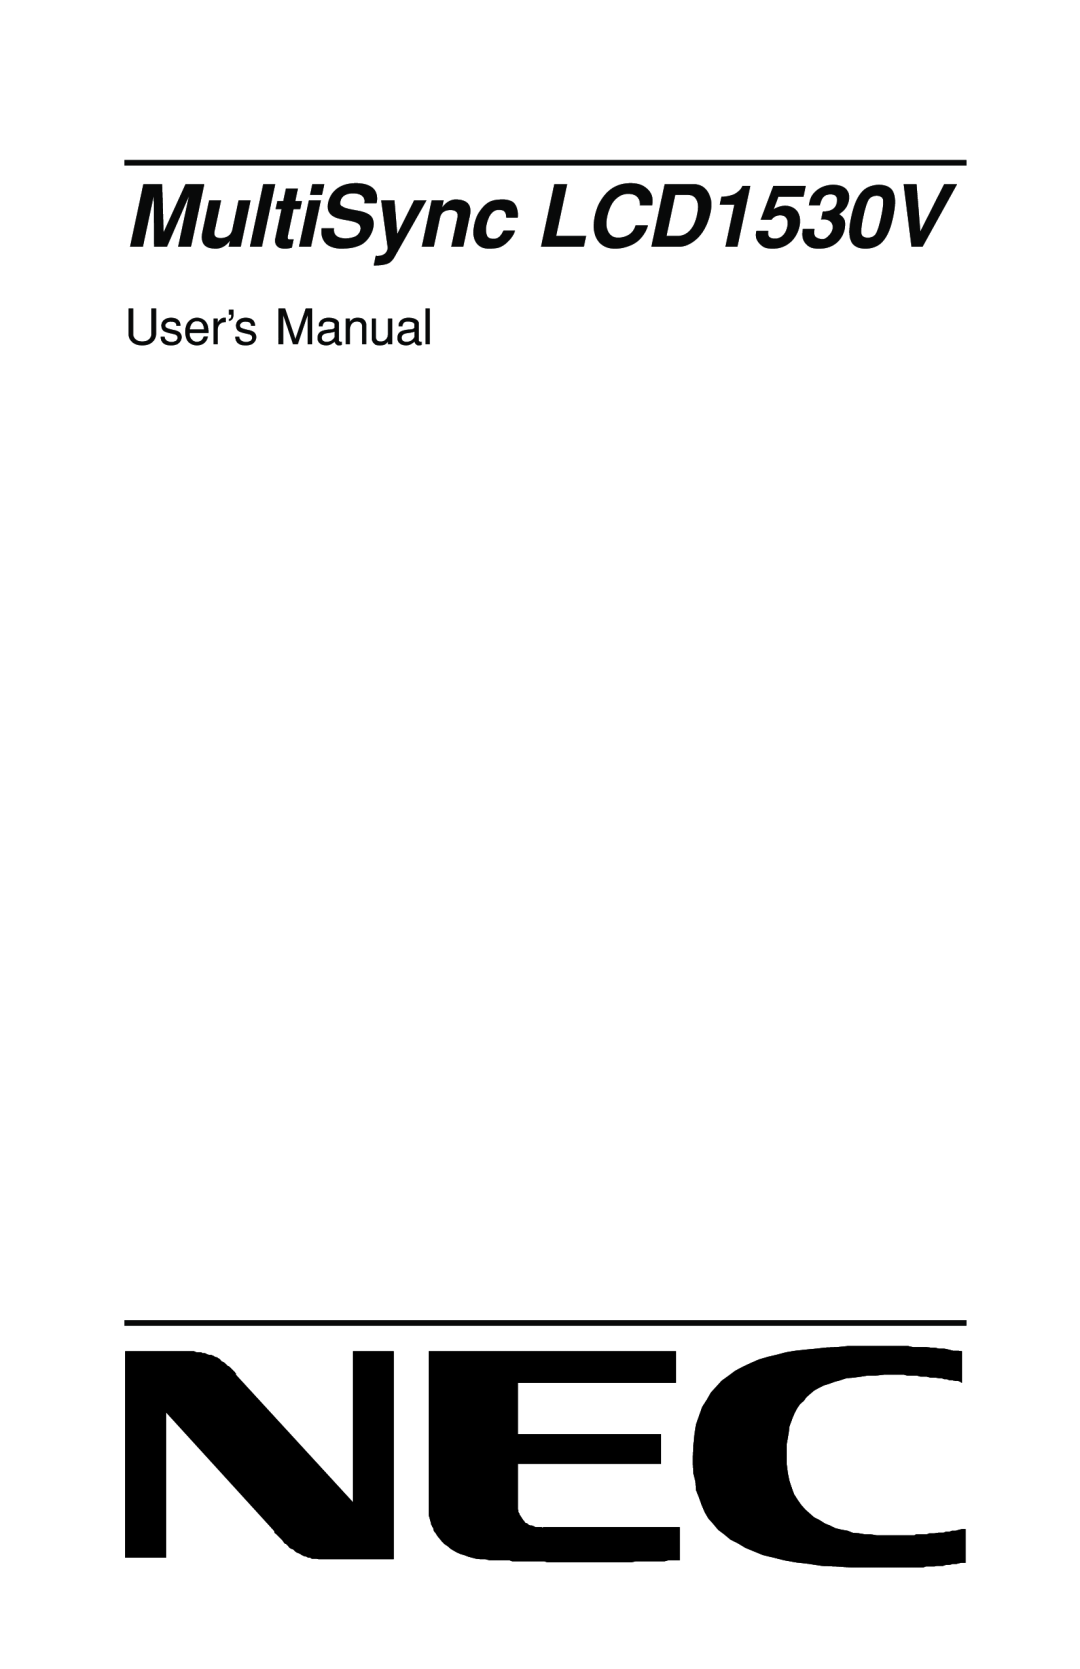 NEC user manual MultiSync LCD1530V, User’s Manual 